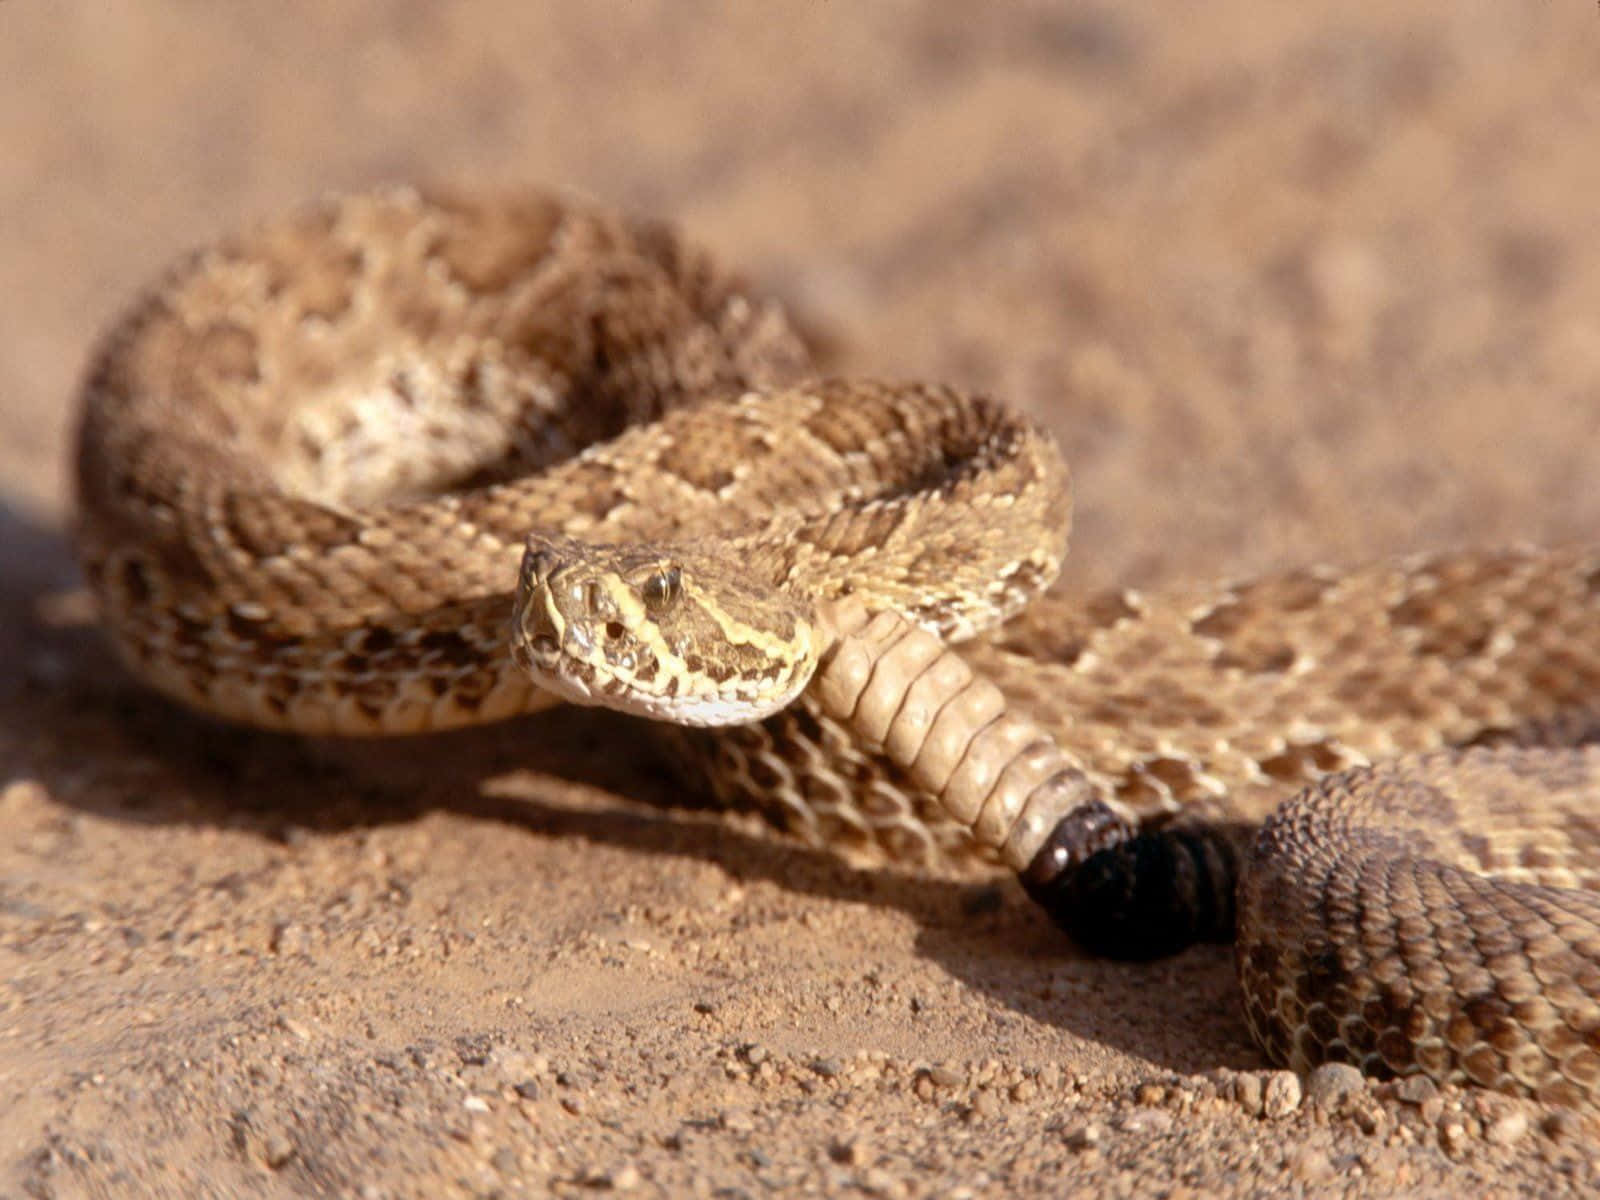 A coiled up rattlesnake in the desert